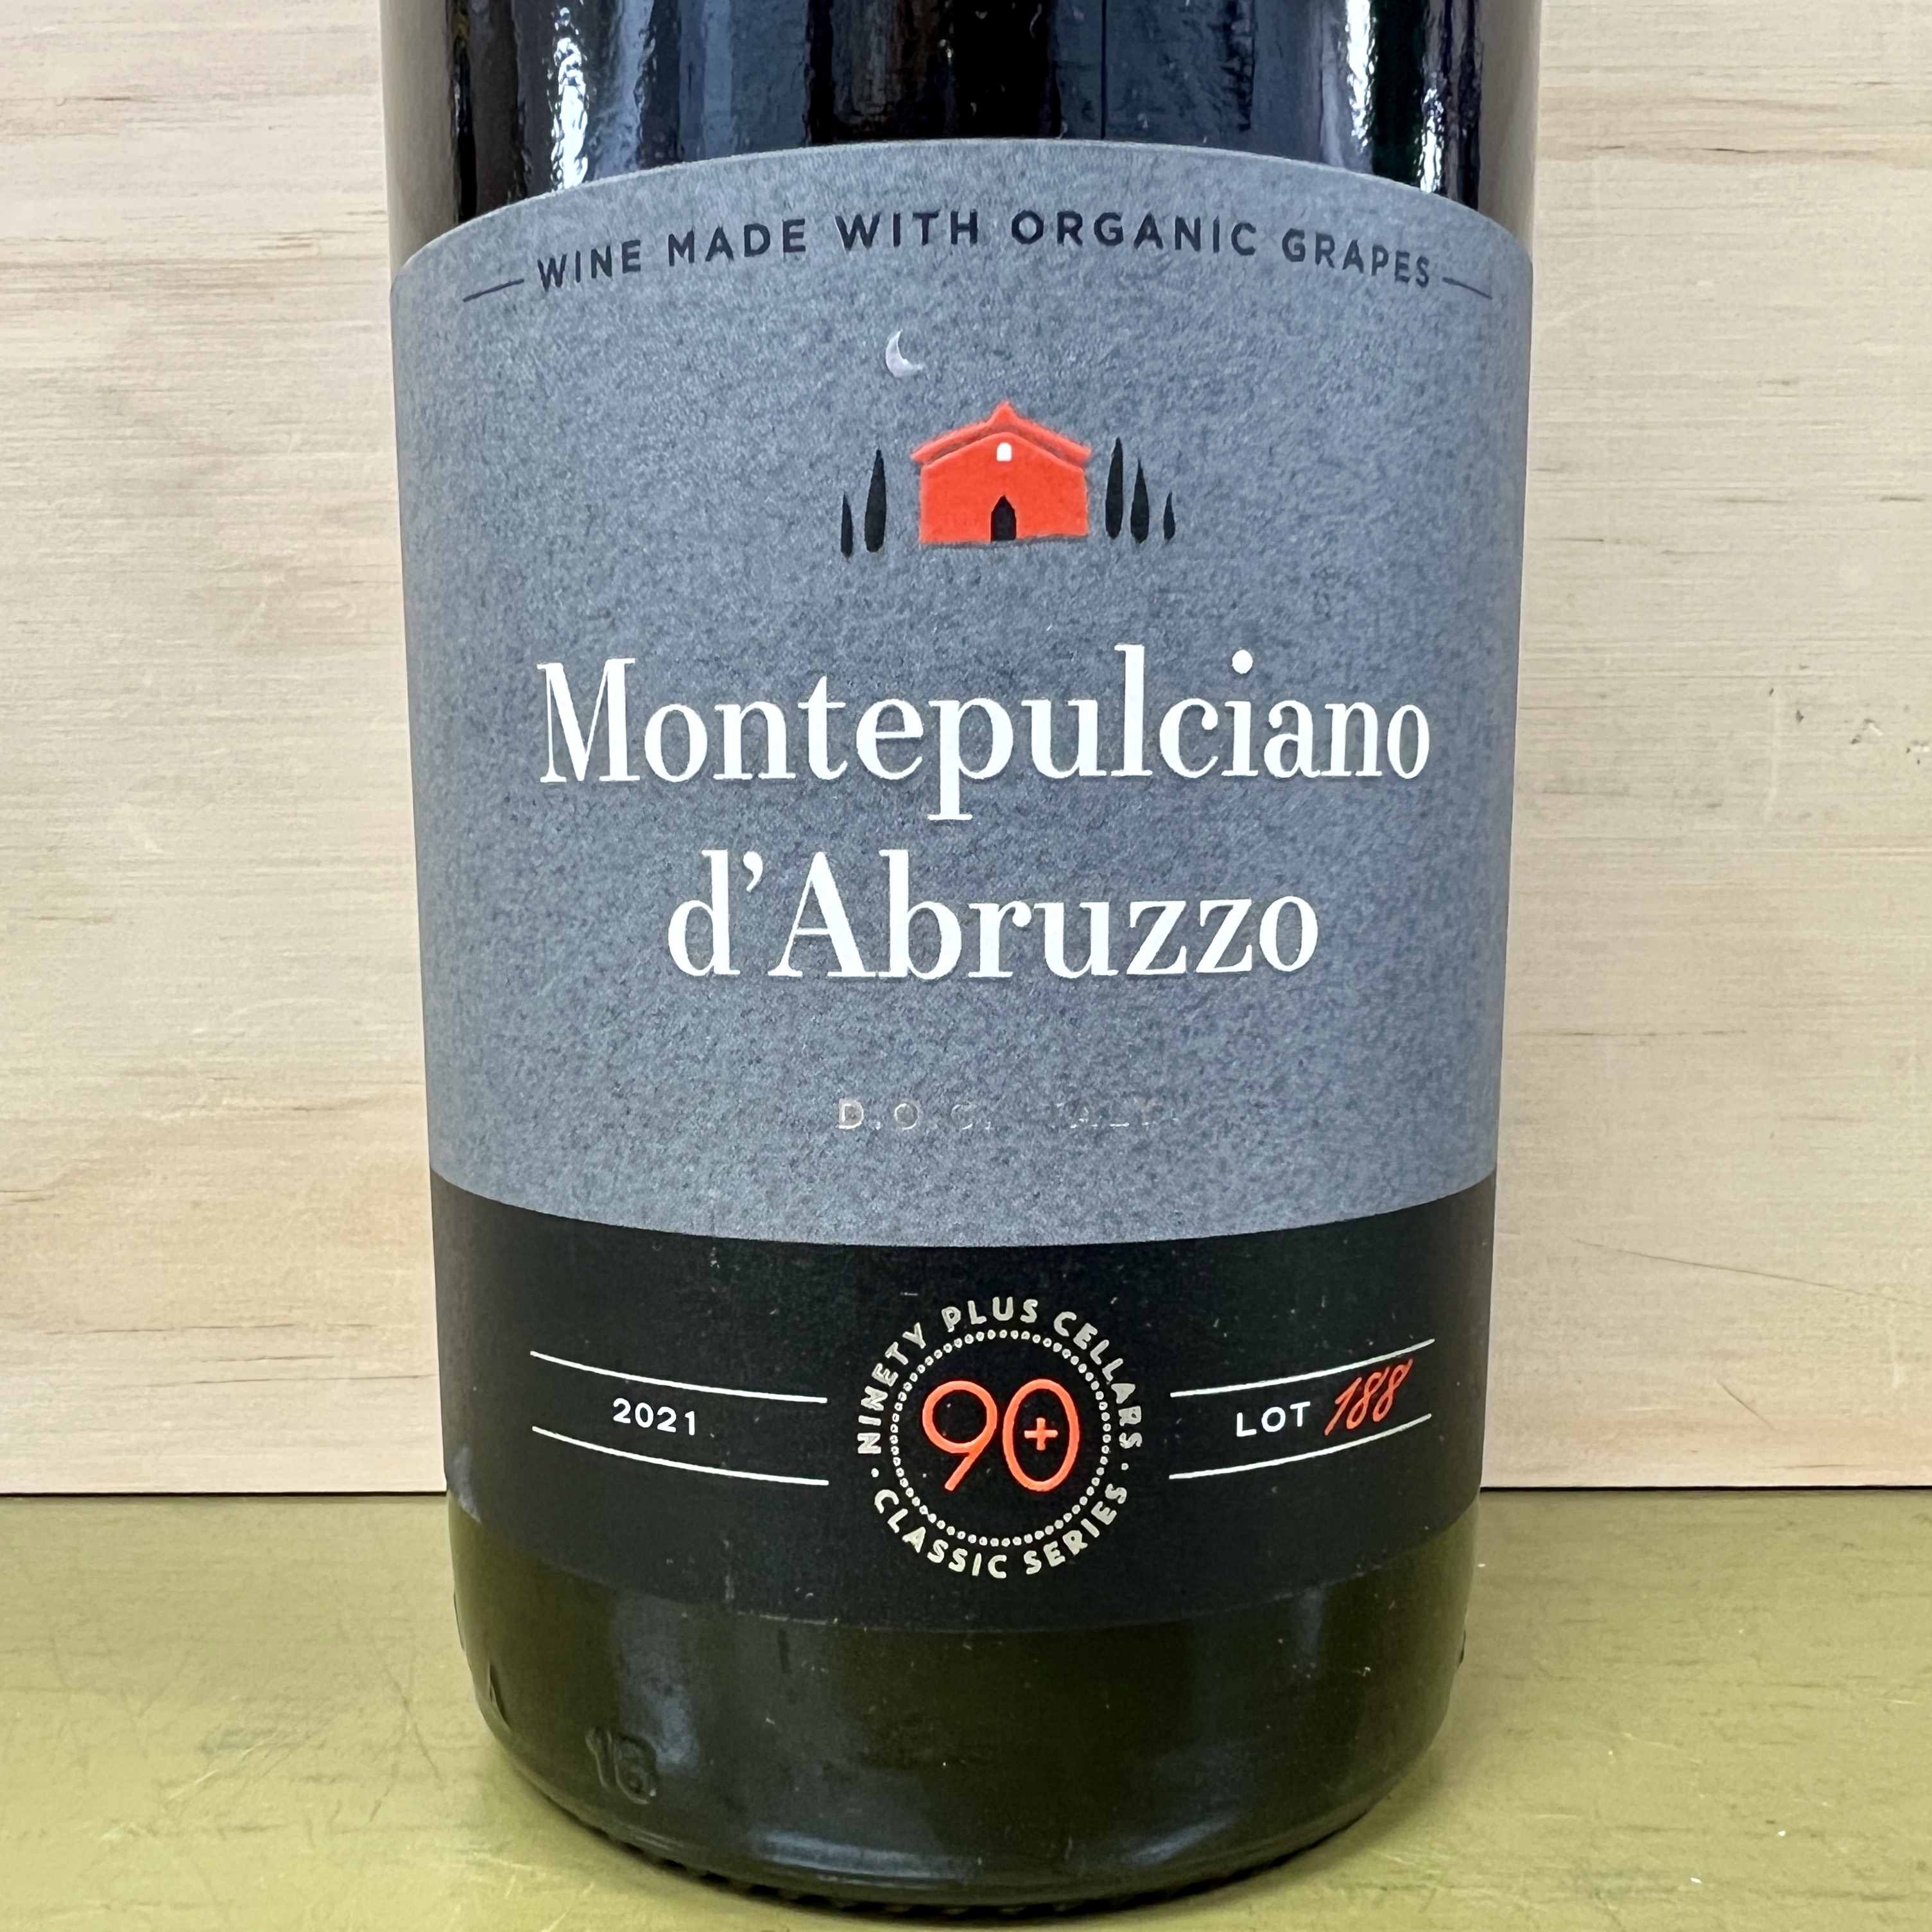 90+ Cellars Montepulciano d'Abruzzo Lot 188 2021 Organic grapes